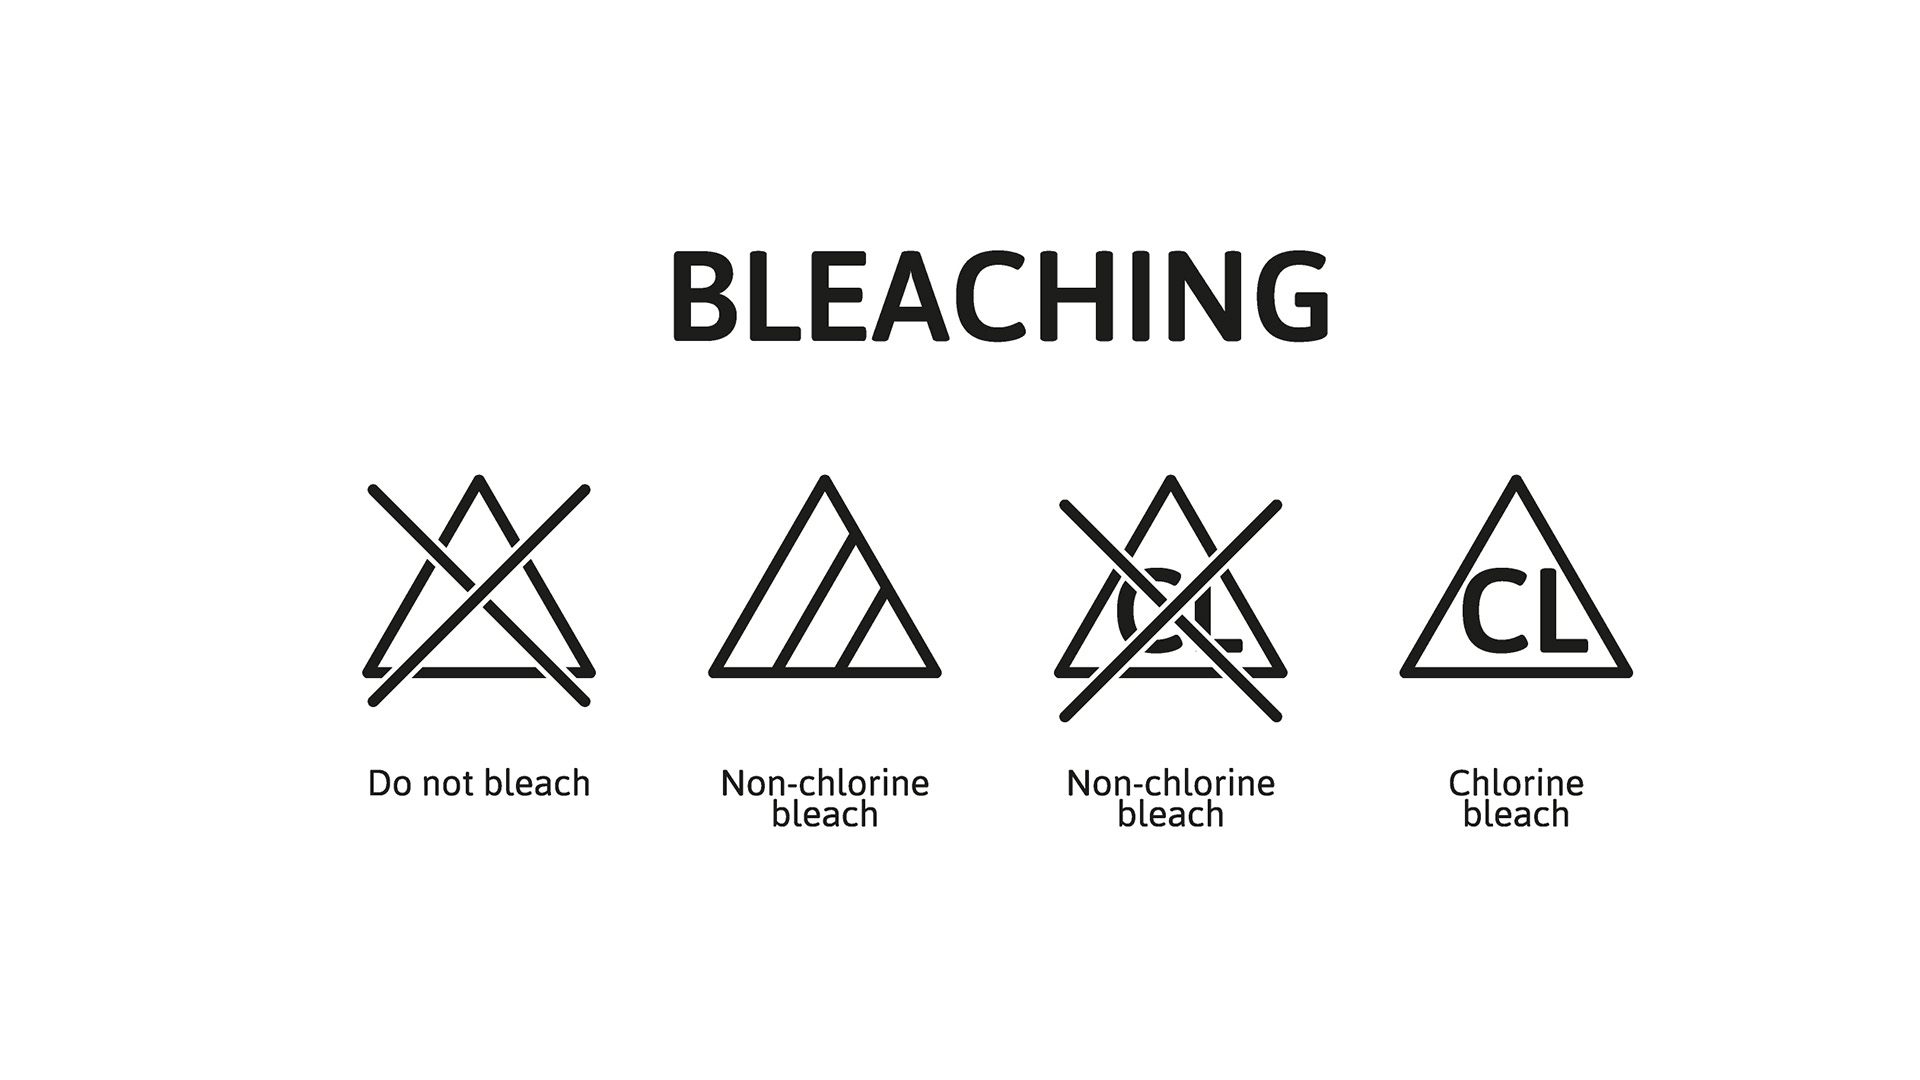 Bleaching symbols guide.